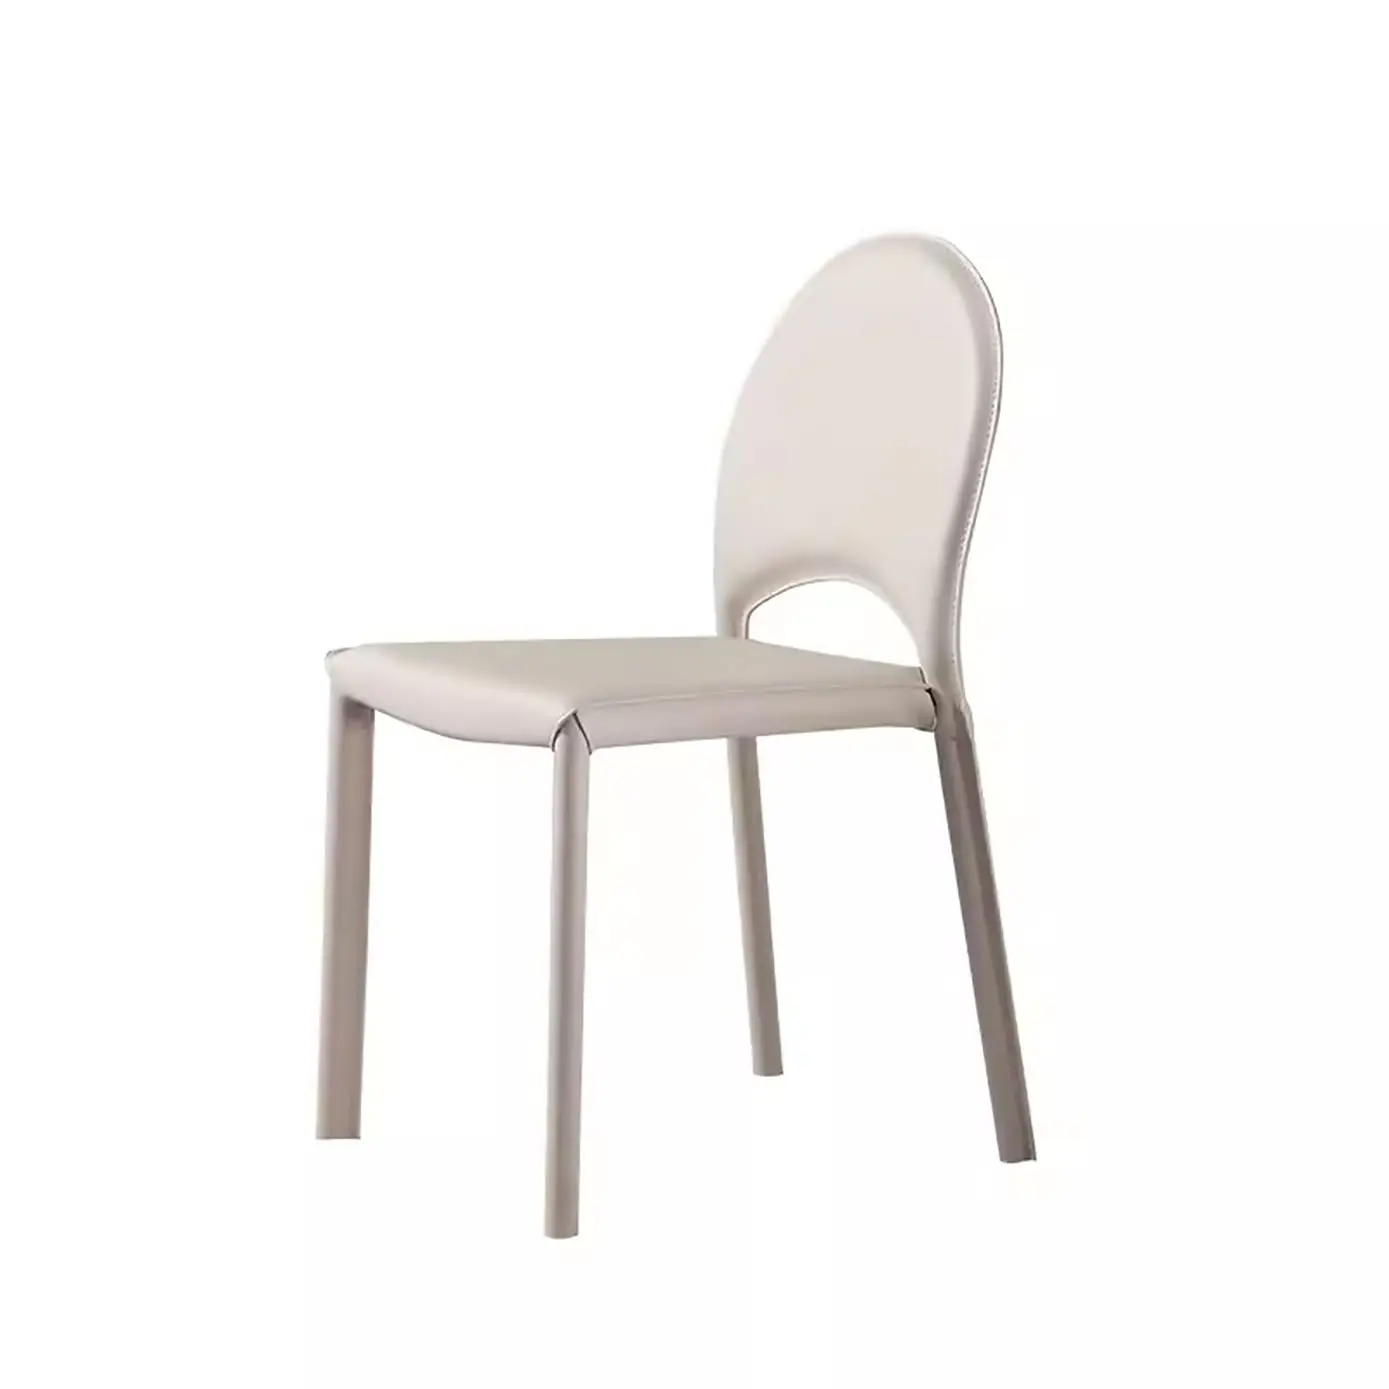 Kursi Kemah krem Perancis, dudukan kulit minimalis Italia sandaran rumah kecil meja makan sadel putih